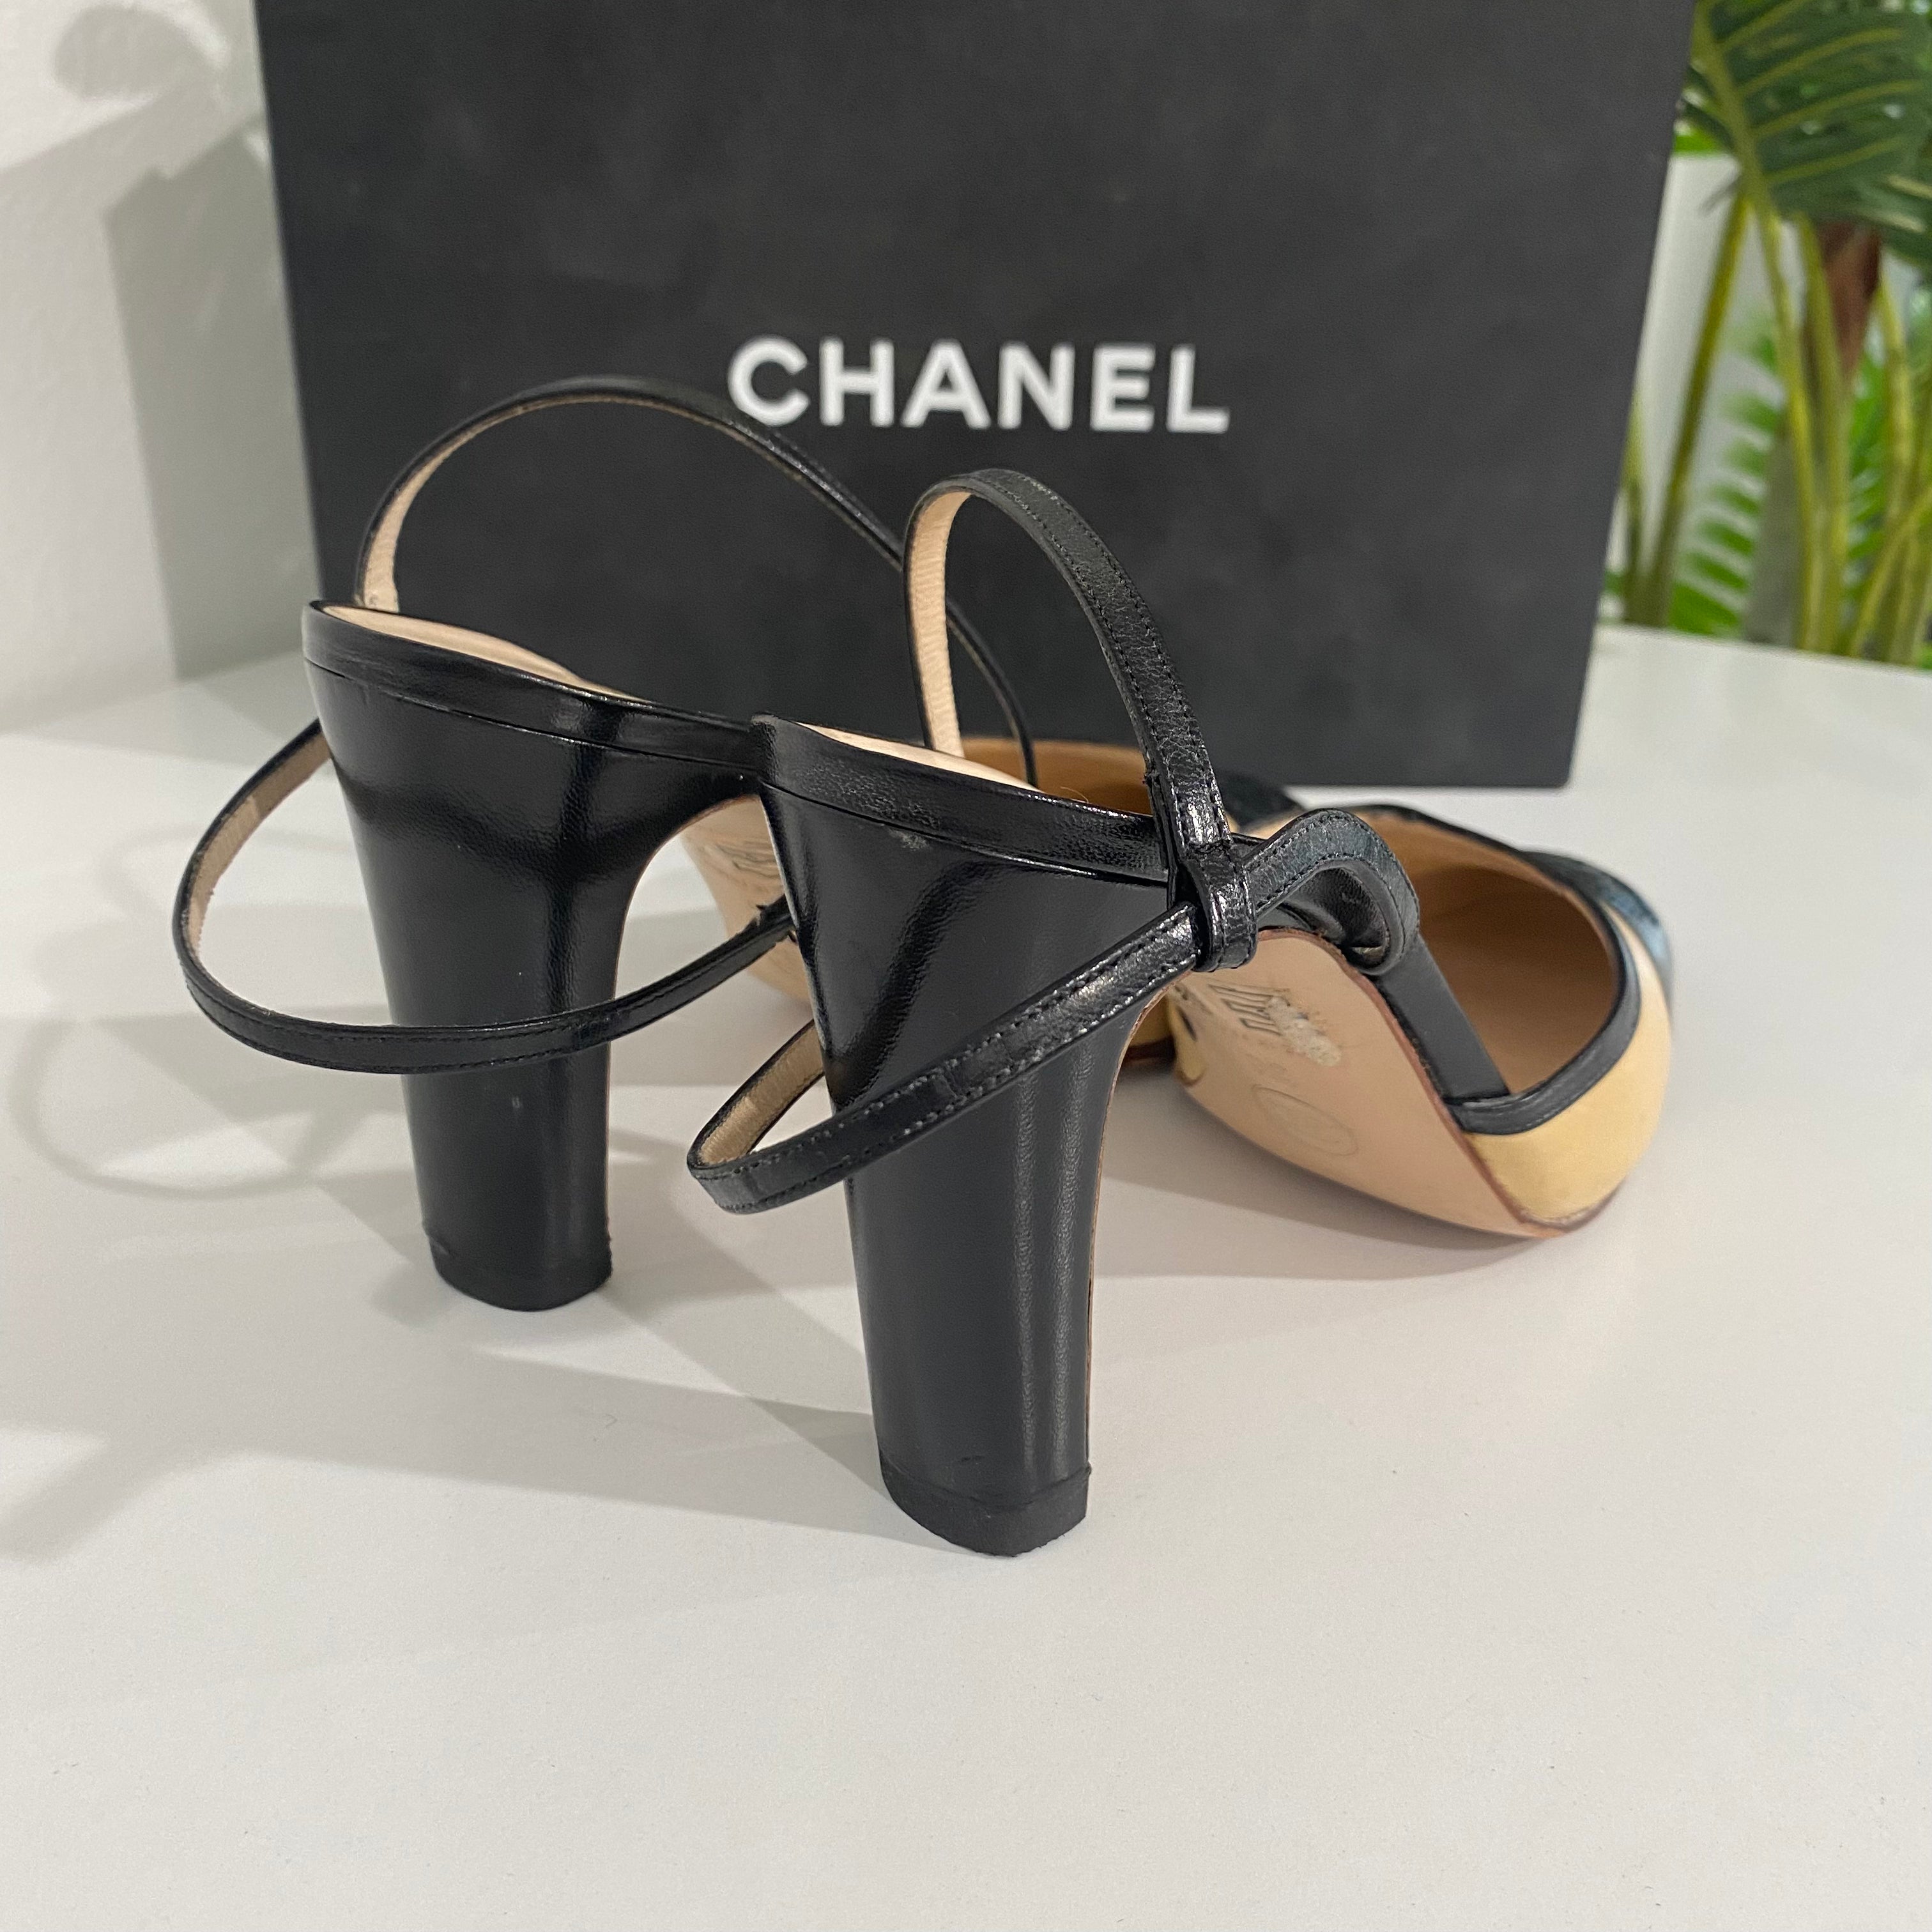 Chanel Vintage Tan/Black Slingback